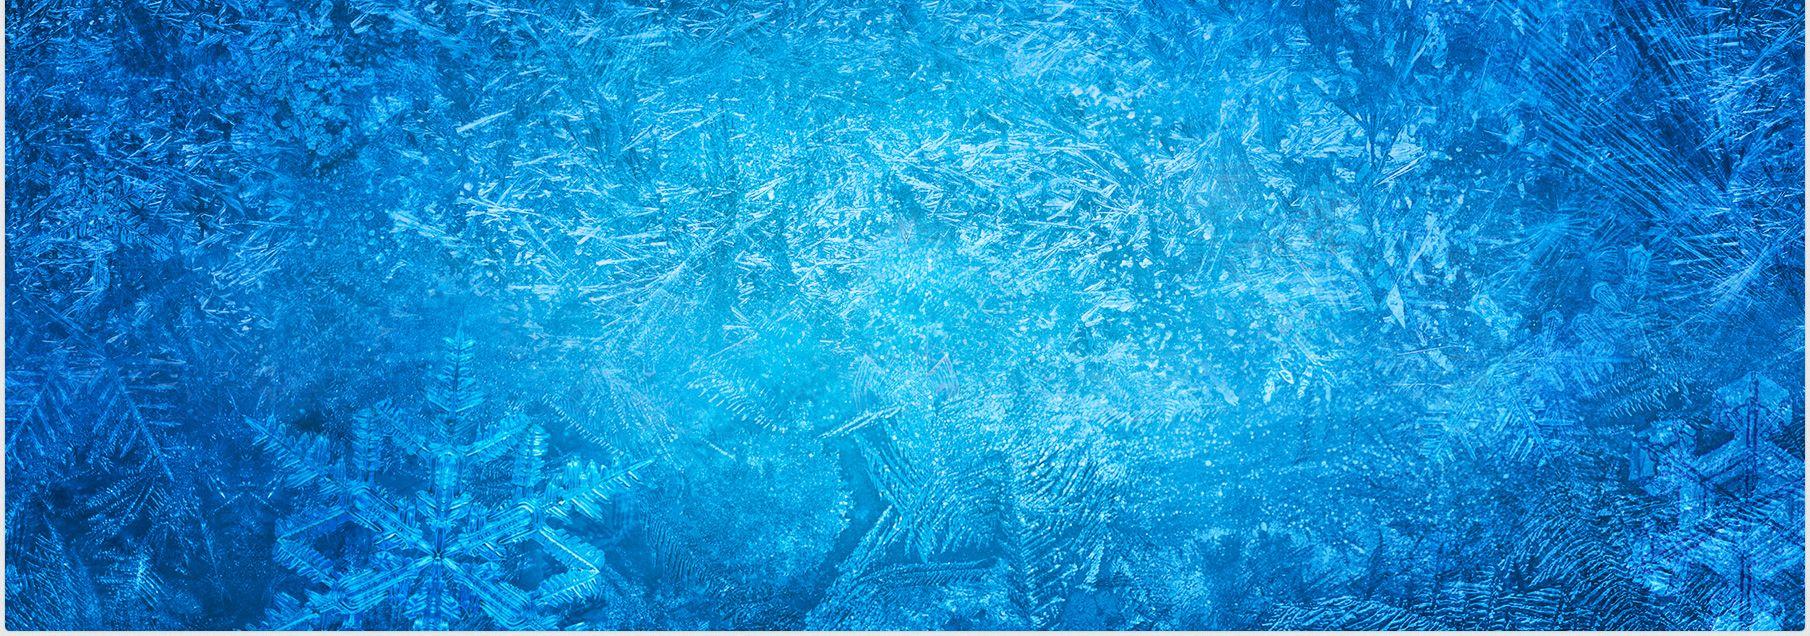 Disney Frozen Background image. Frozen. Frozen